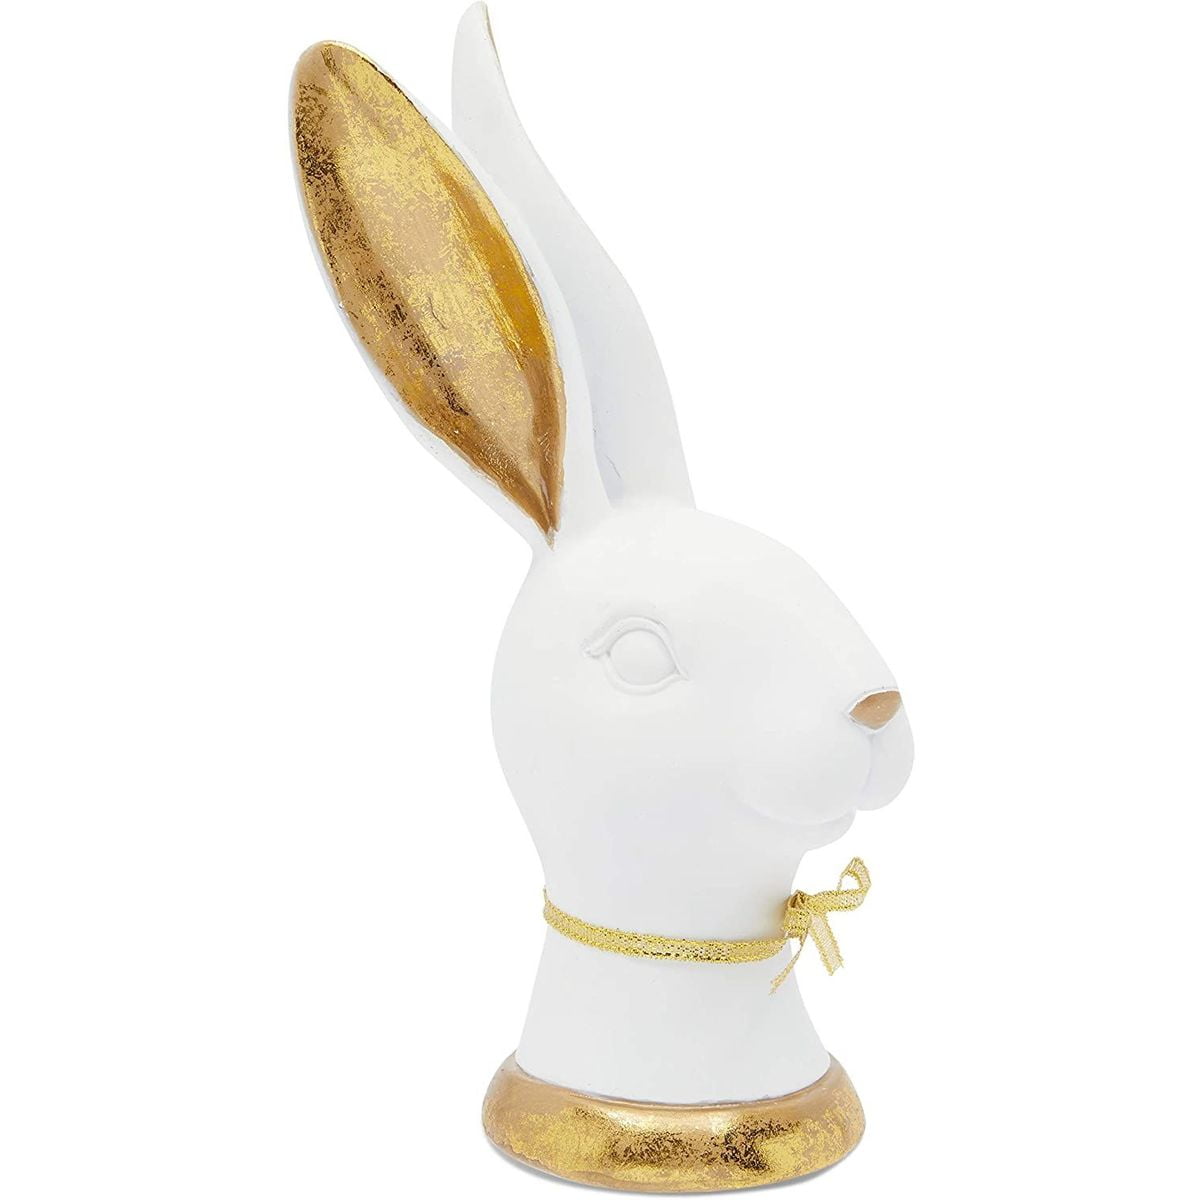 Bunny Rabbit Hand Painted Ceramic Figurine Easter Home Decor